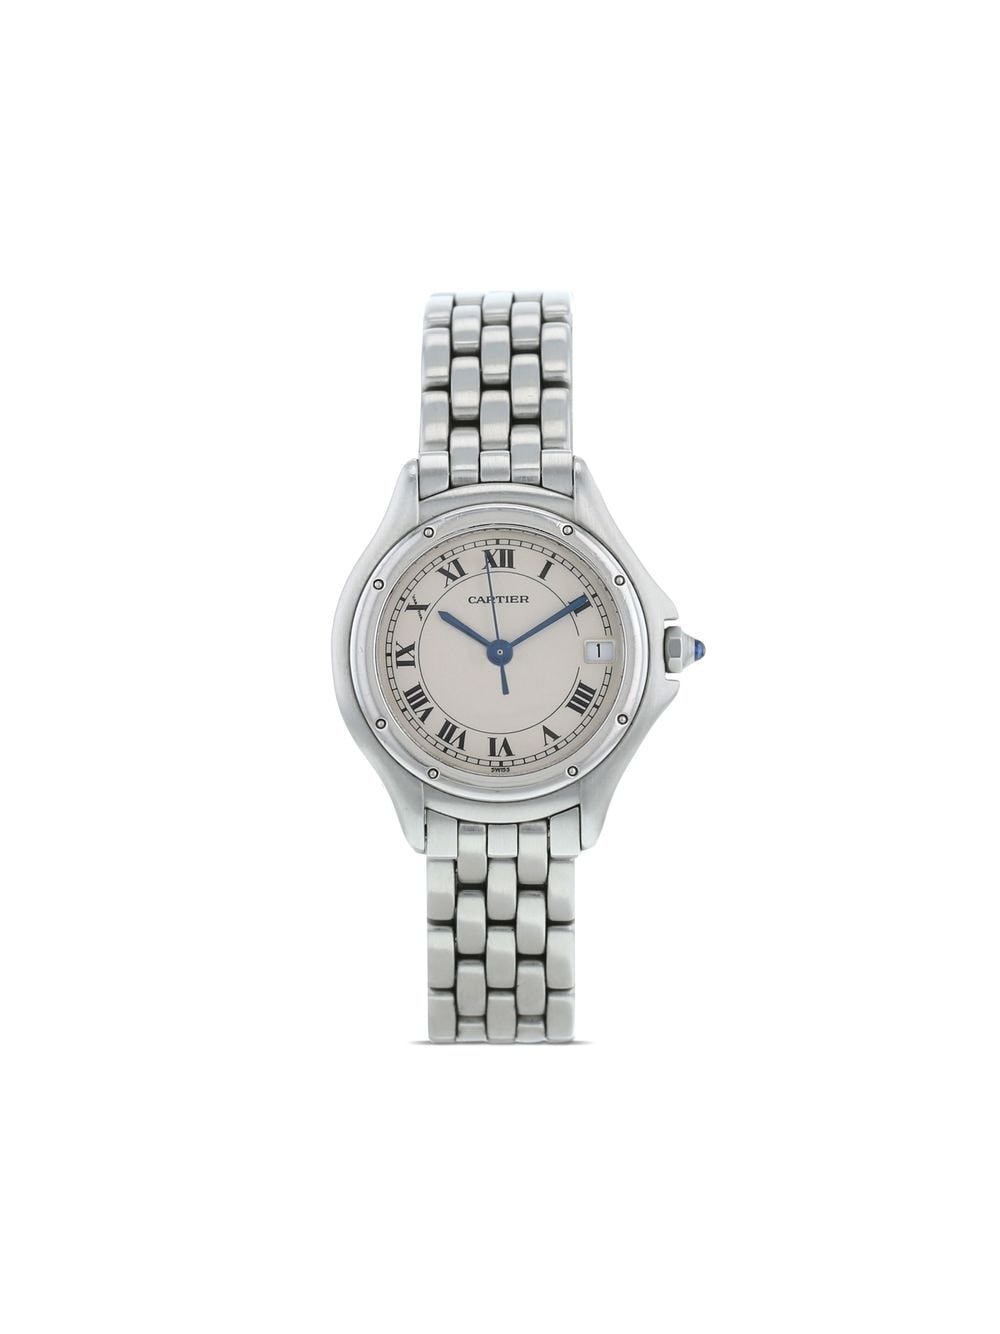 Cartier 1990 pre-owned Cougar horloge - Beige